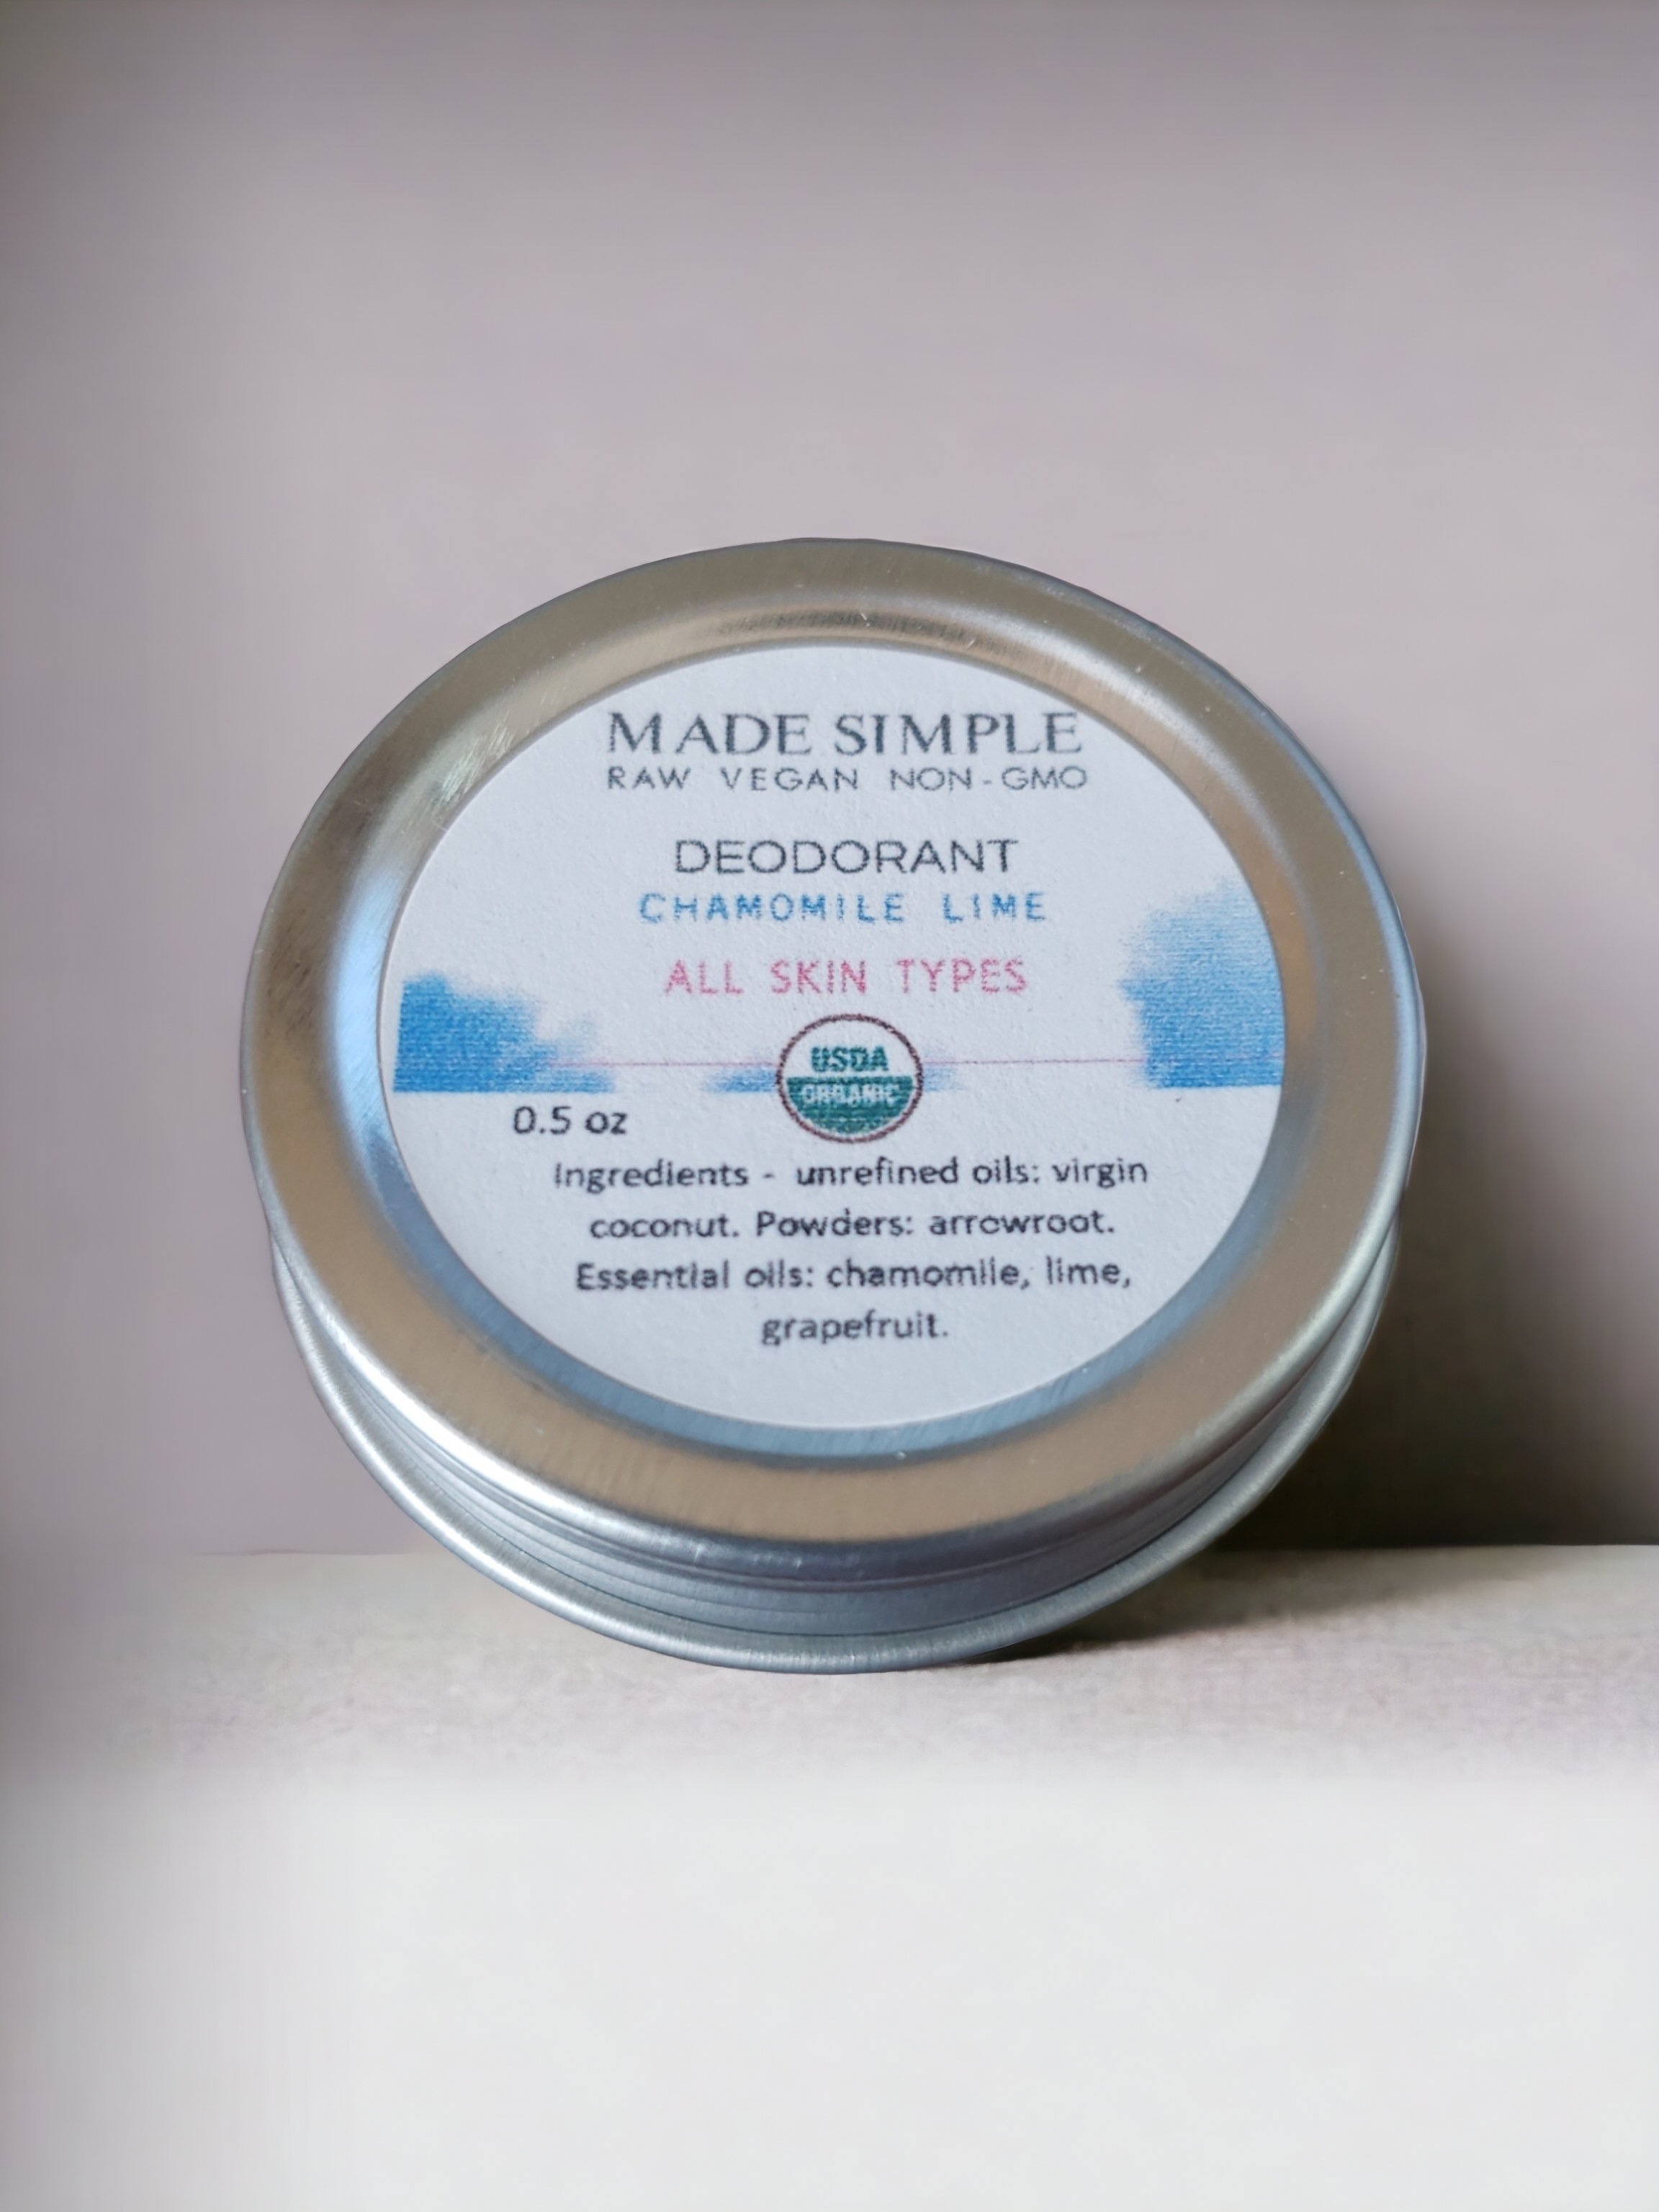 Made Simple Skin Care - Chamomile Lime Deodorant usda certified organic raw vegan non-gmo sample